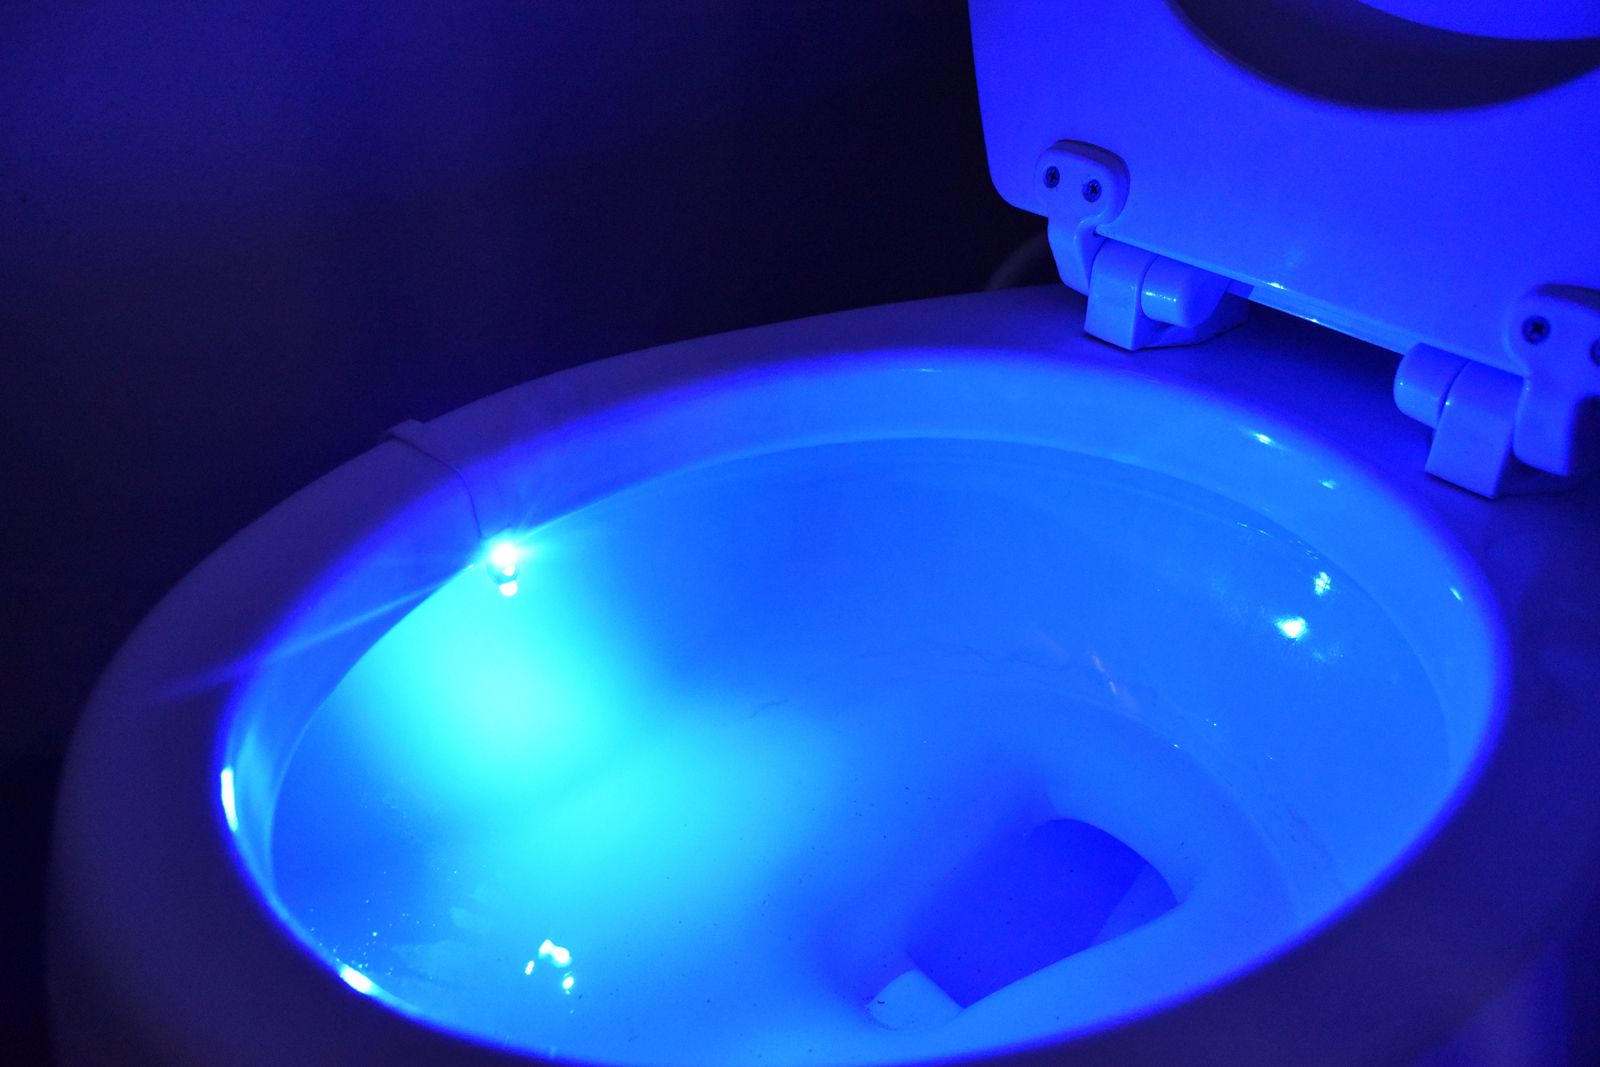 Chunace Toilet Night Lights 4 Pack - Motion Sensor Activated LED Bowl Lamp  for Bathroom Illumination…See more Chunace Toilet Night Lights 4 Pack 